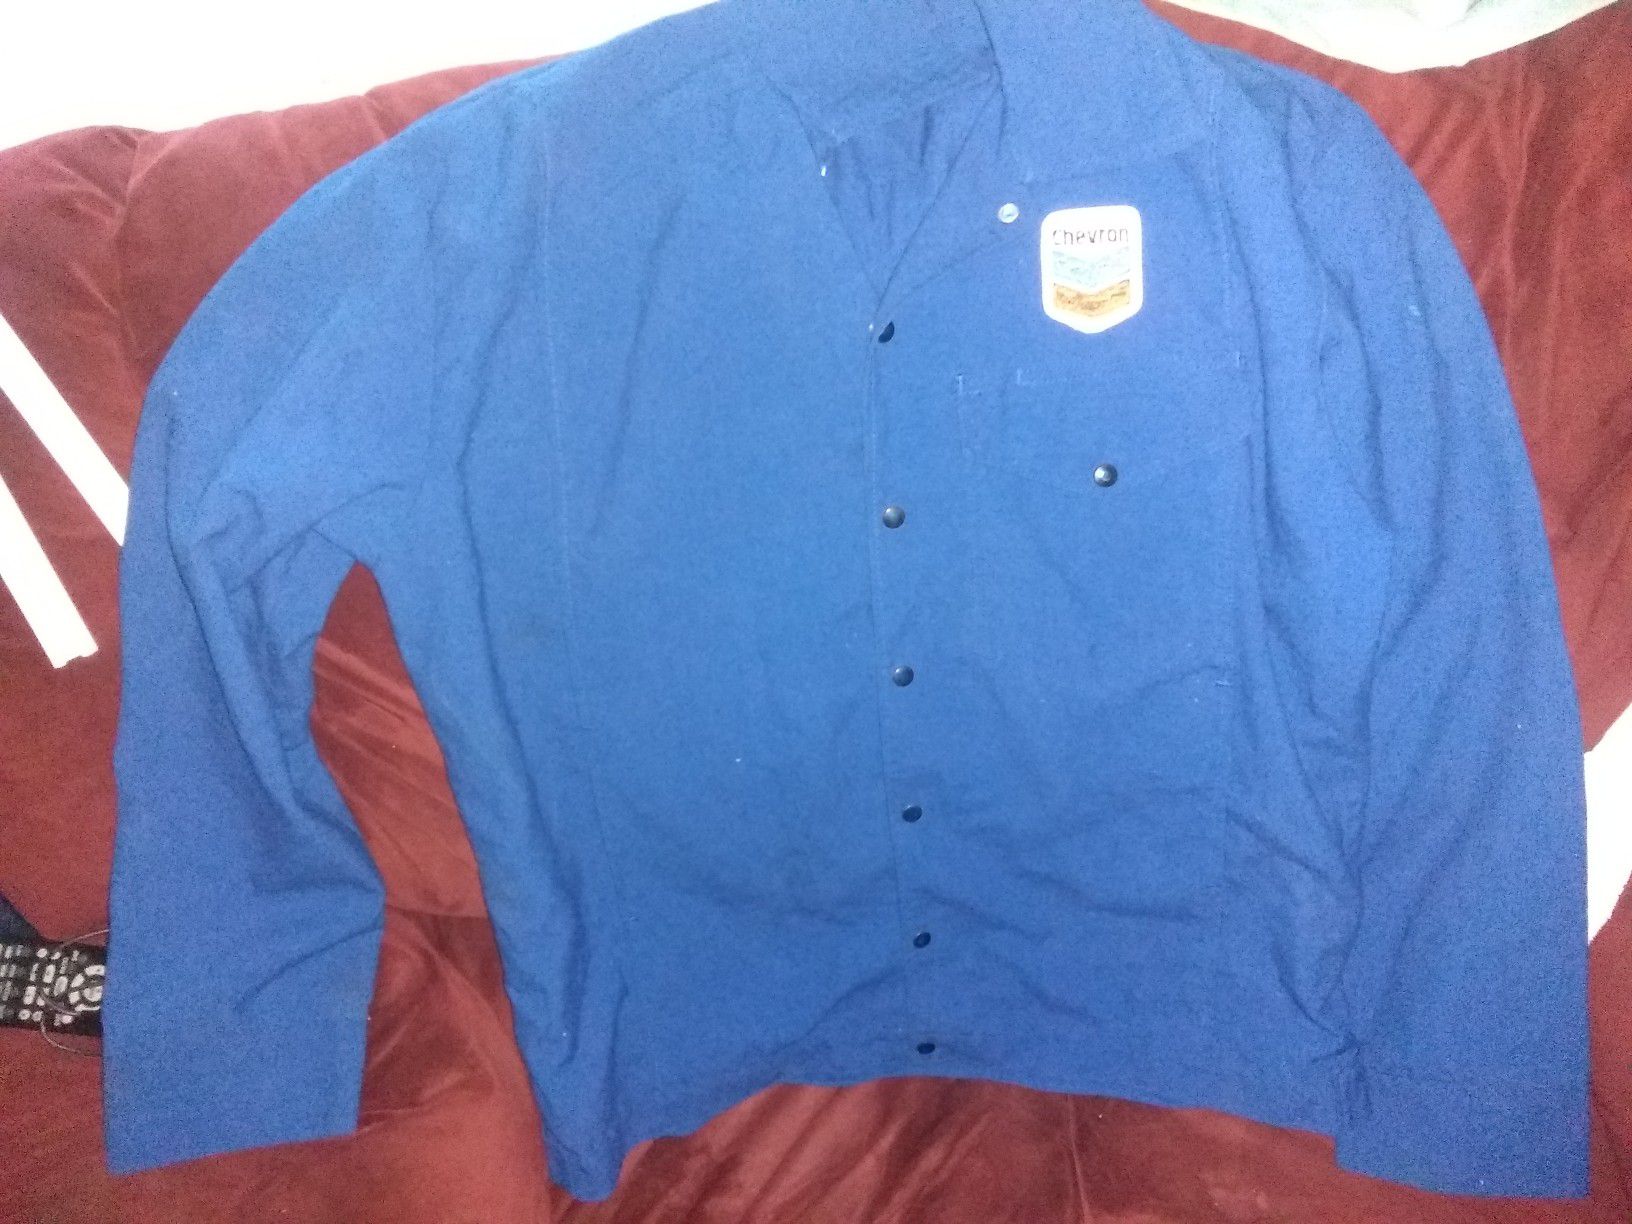 Workrite Frc XL Jacket like shirt with pockets